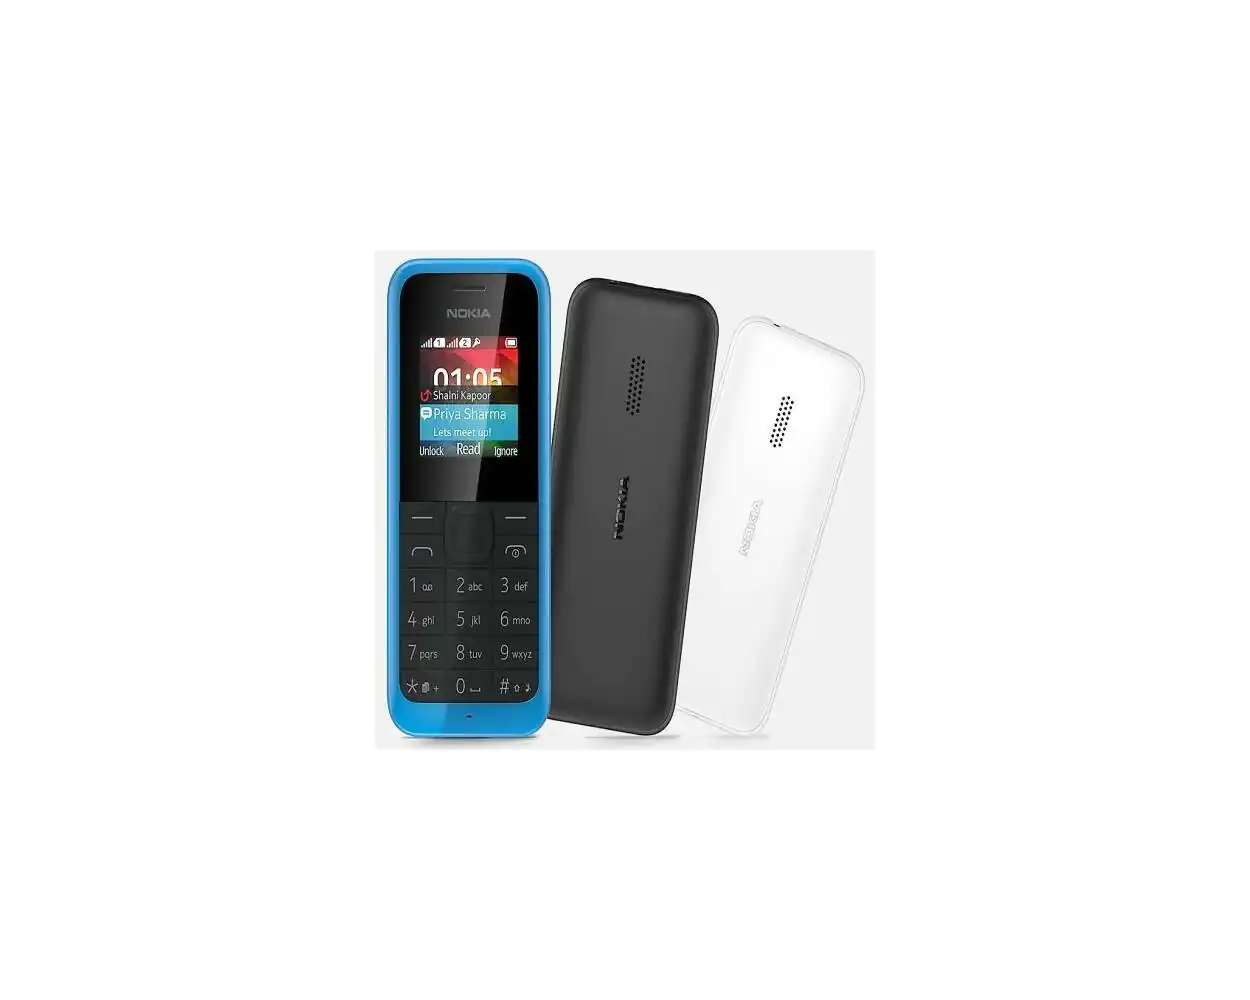 Nokia 105 Dual Sim Feature Phone, Buy Online